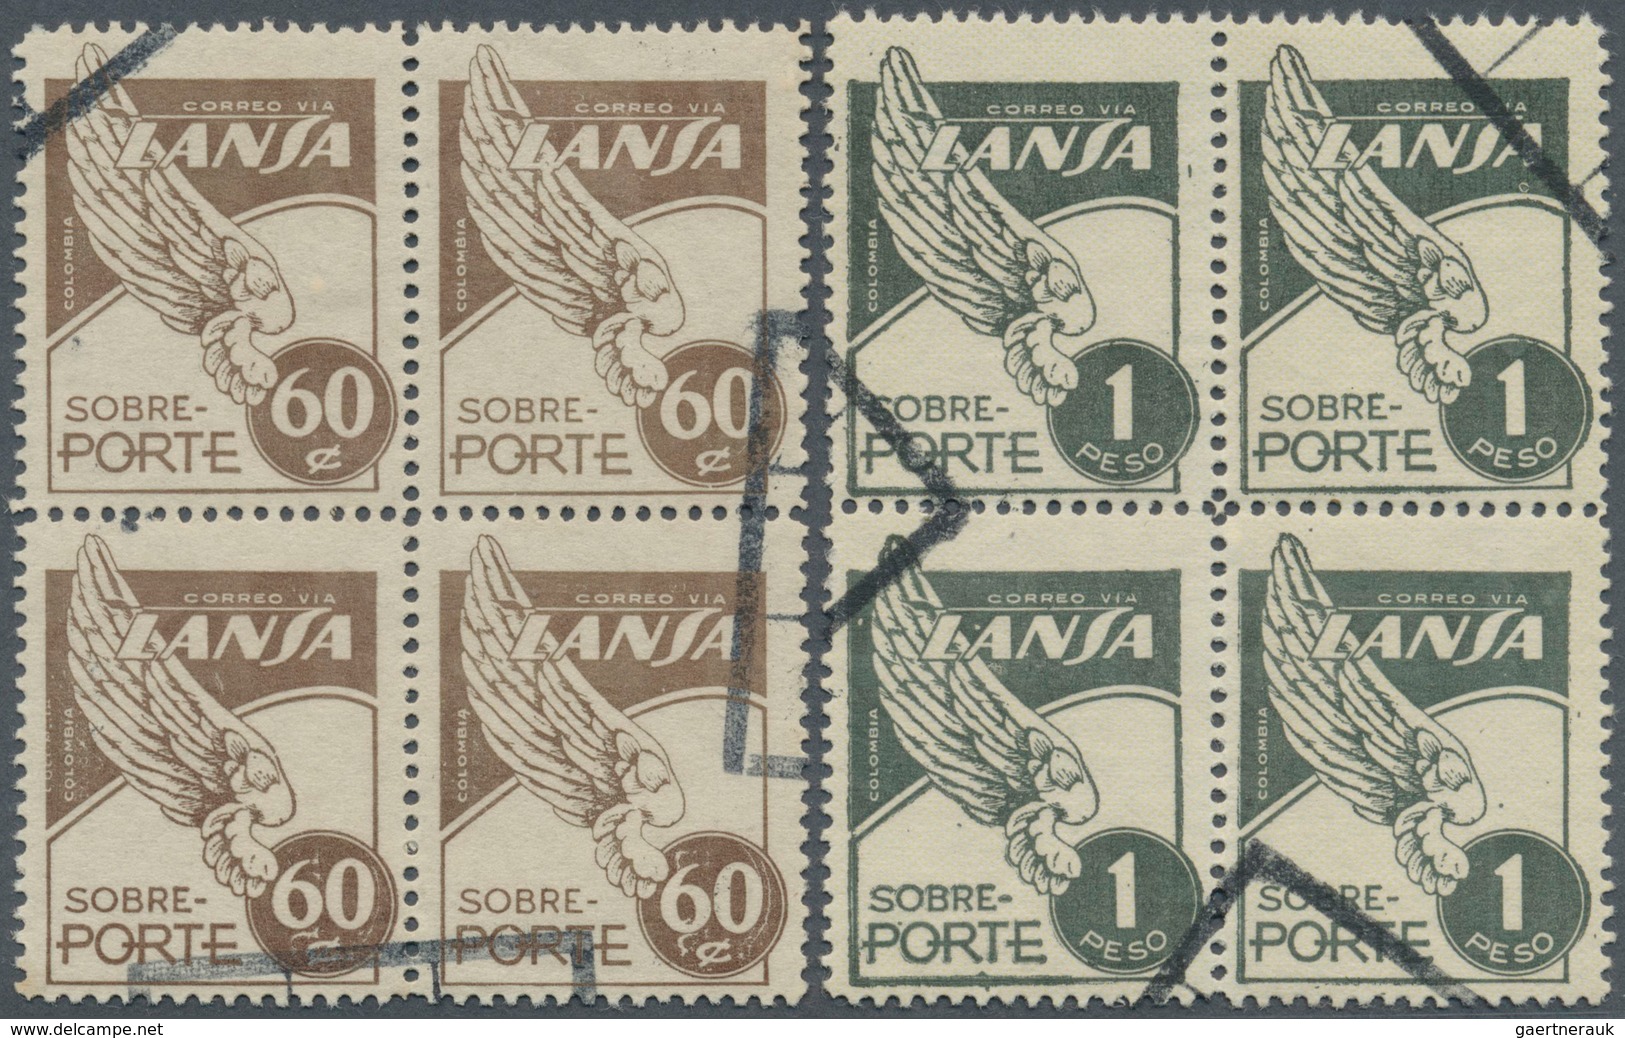 Kolumbien: 1950, Airmail Issue LANSA (Lineas Aereas Nacionales Sociedad Anonima) Complete Set In Use - Colombia